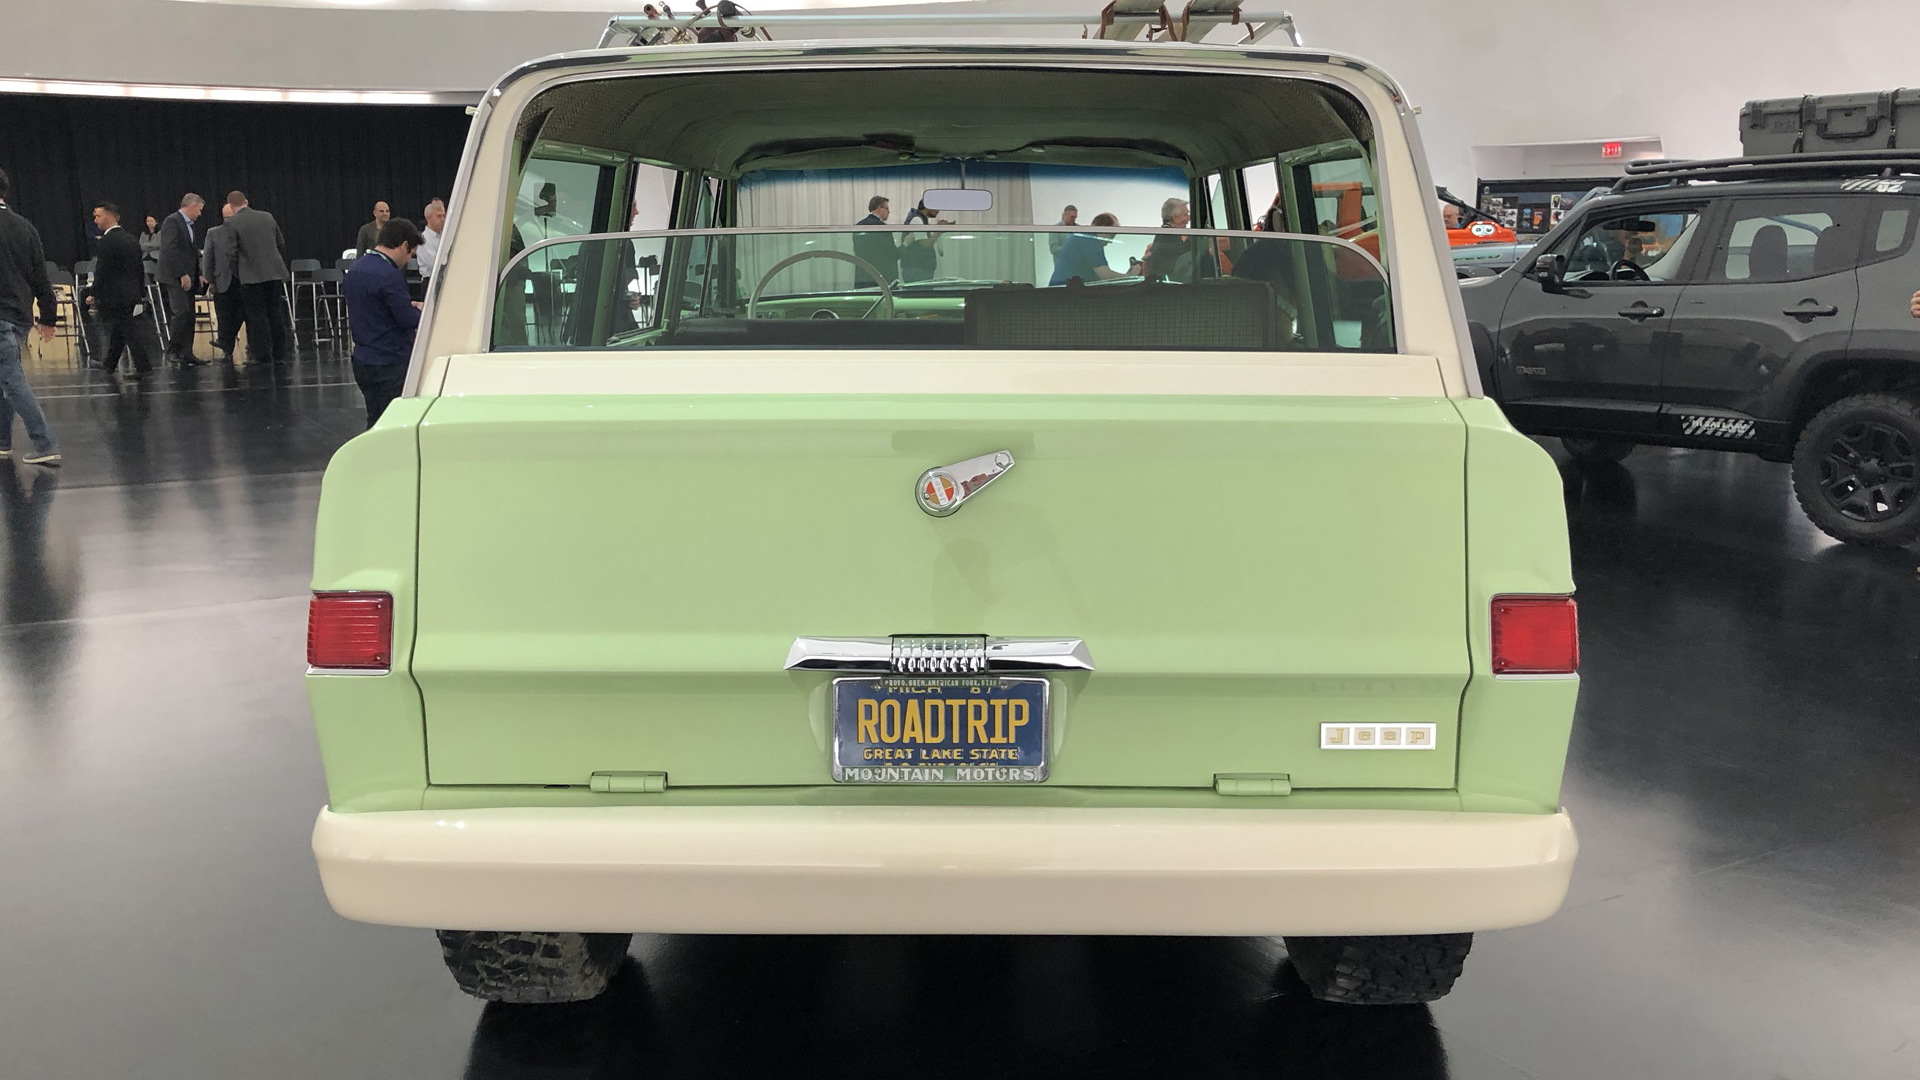 Jeep Wagoneer Roadtrip concept, 2018 Moab Easter Jeep Safari